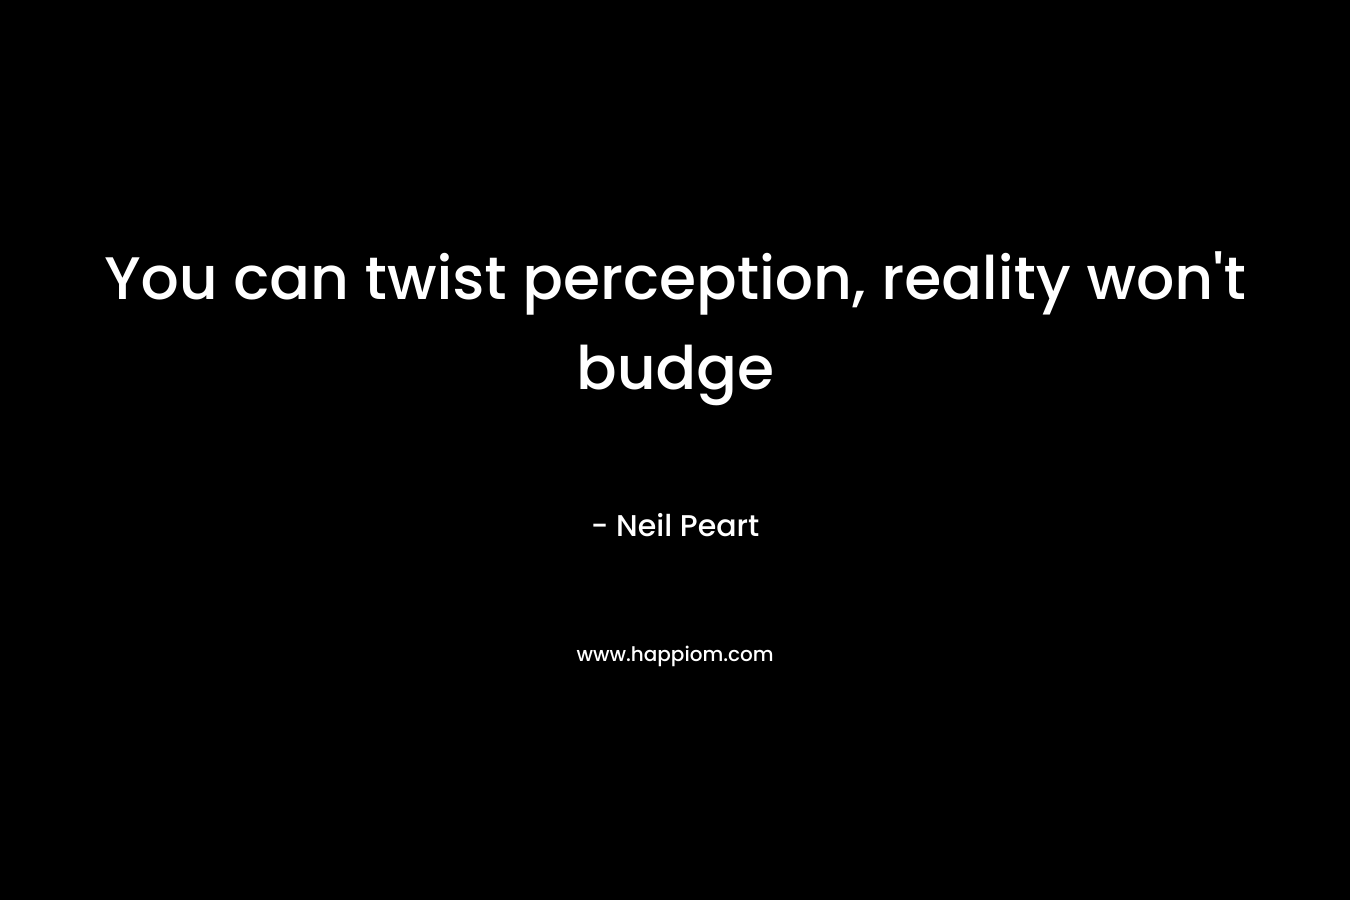 You can twist perception, reality won't budge